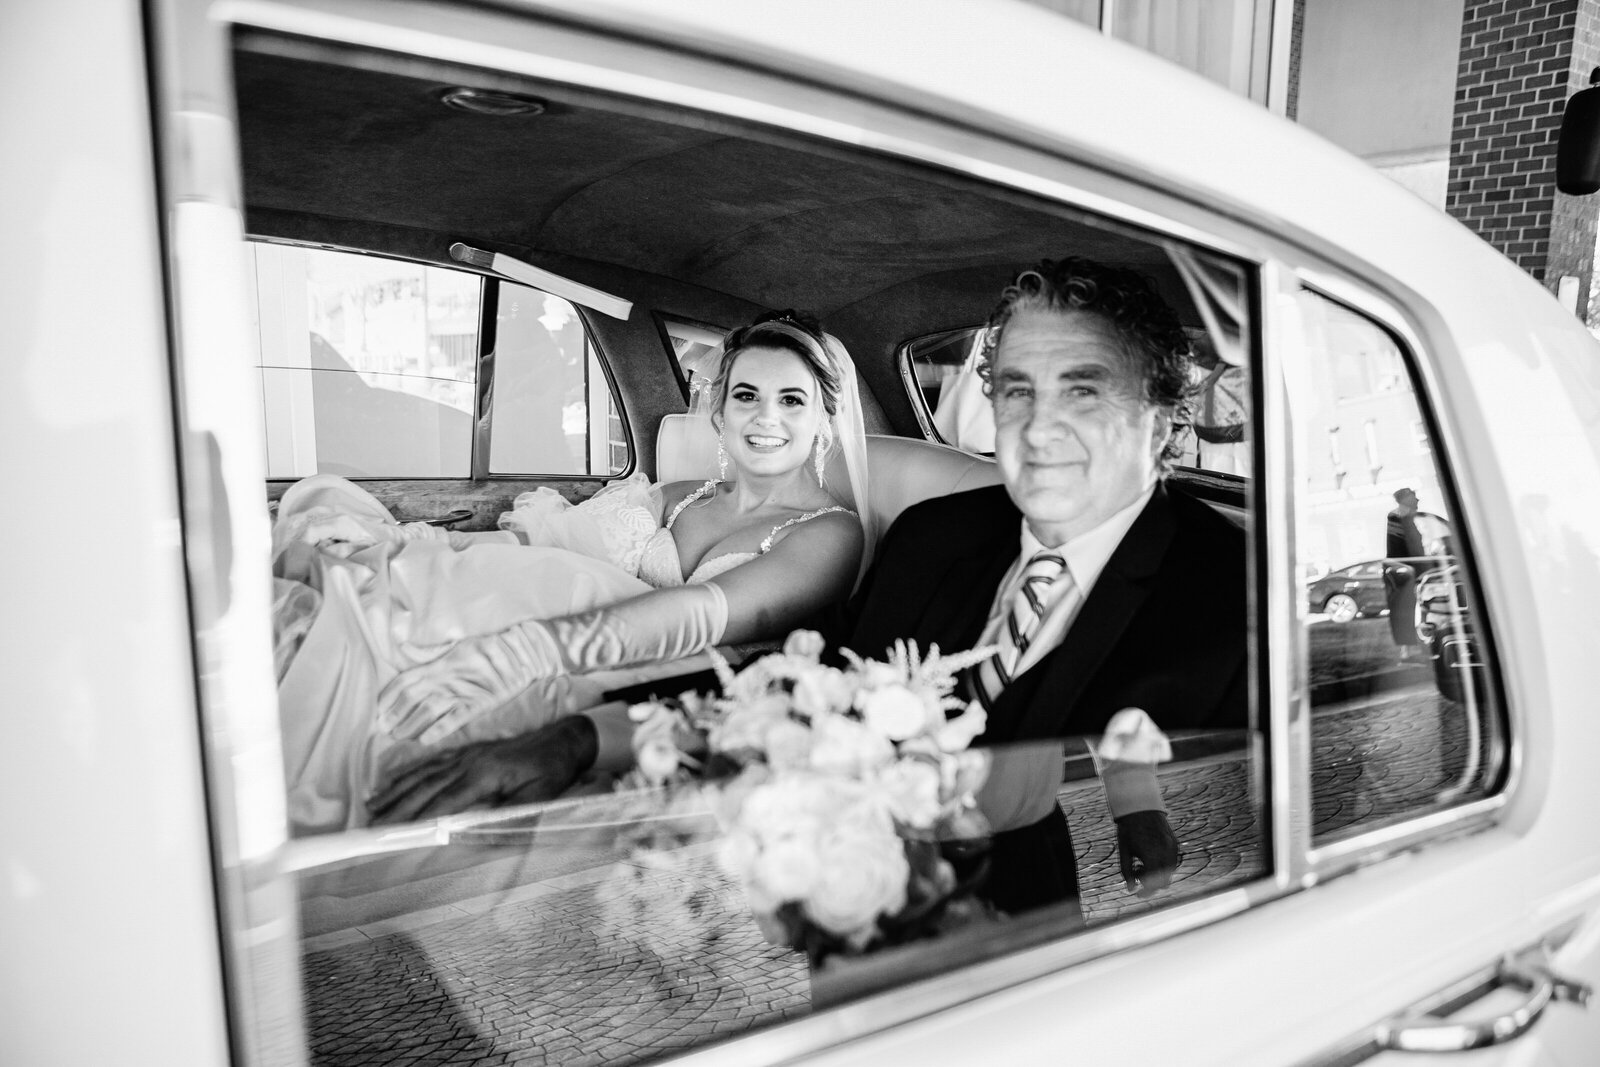 New-England-Wedding-Photographer-Sabrina-Scolari-27